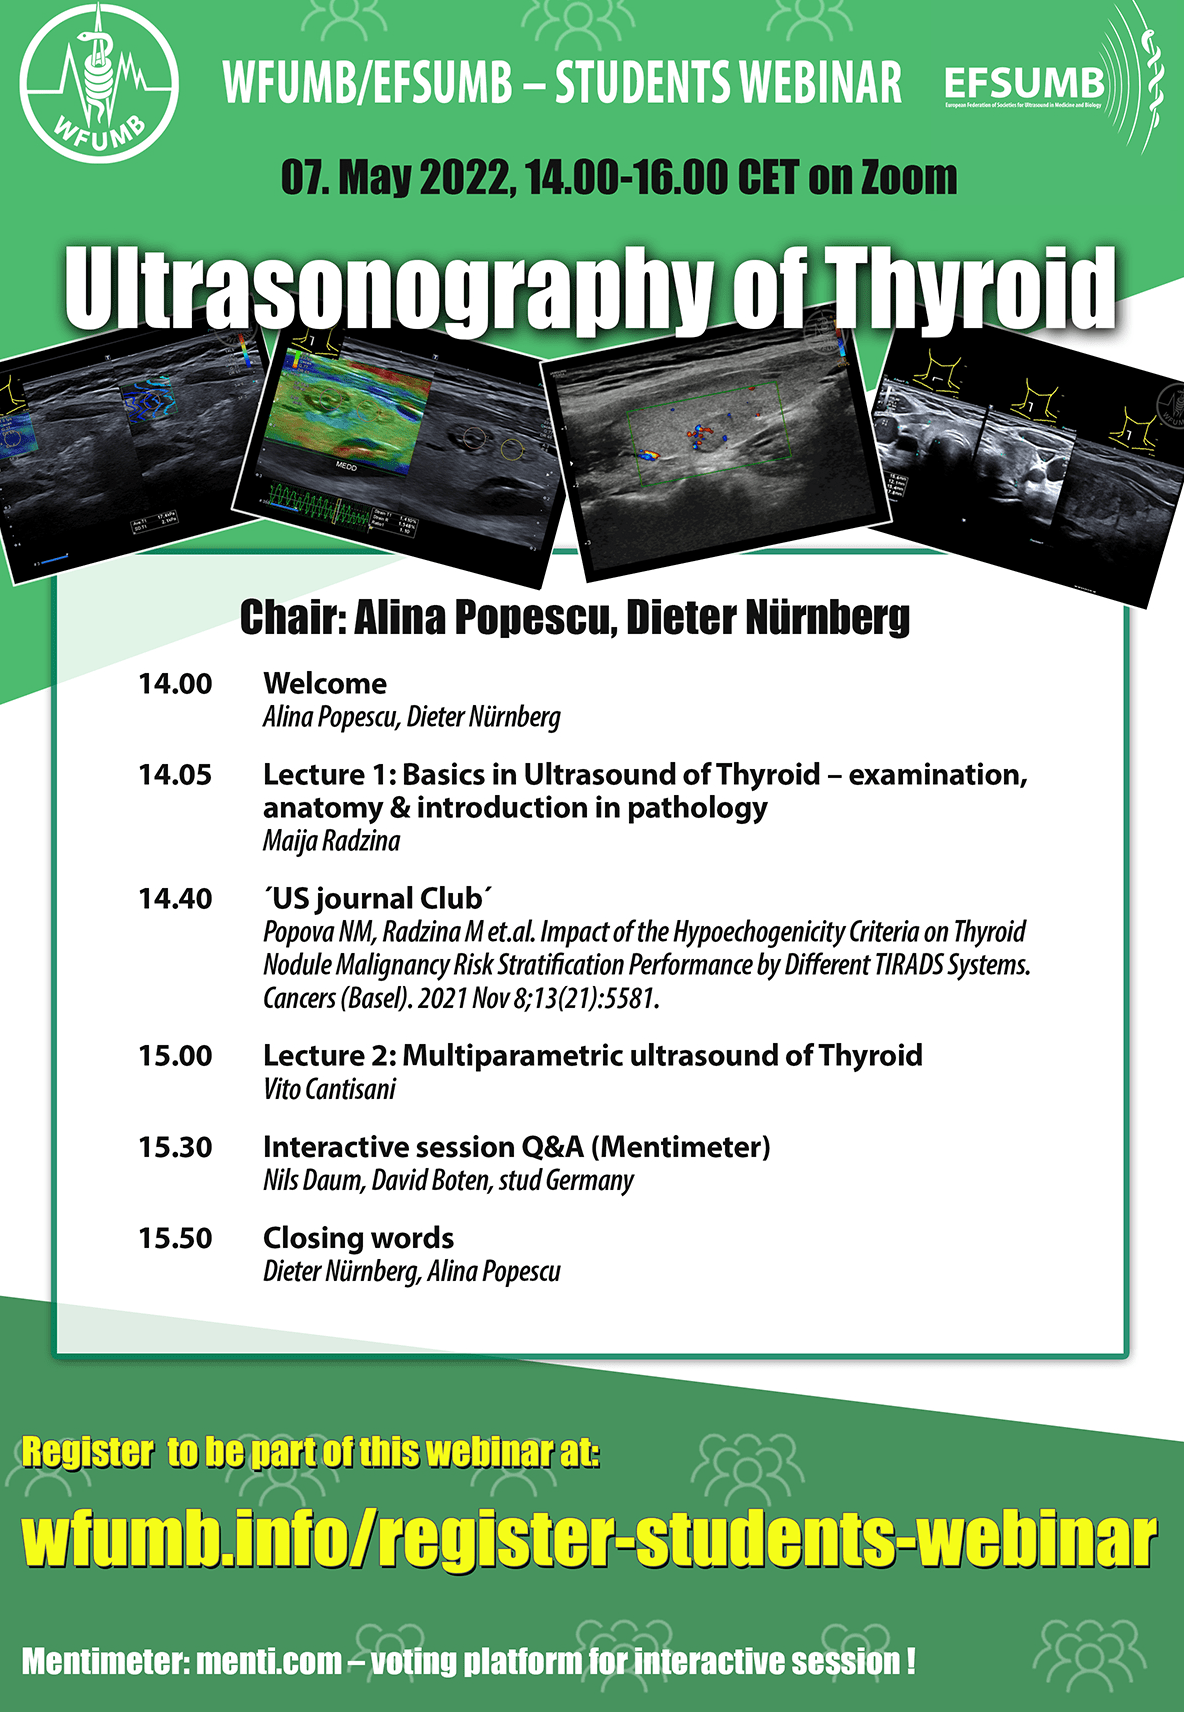 WFUMB-EFSUMB Students US webinar -Ultrasonography of Thyroid